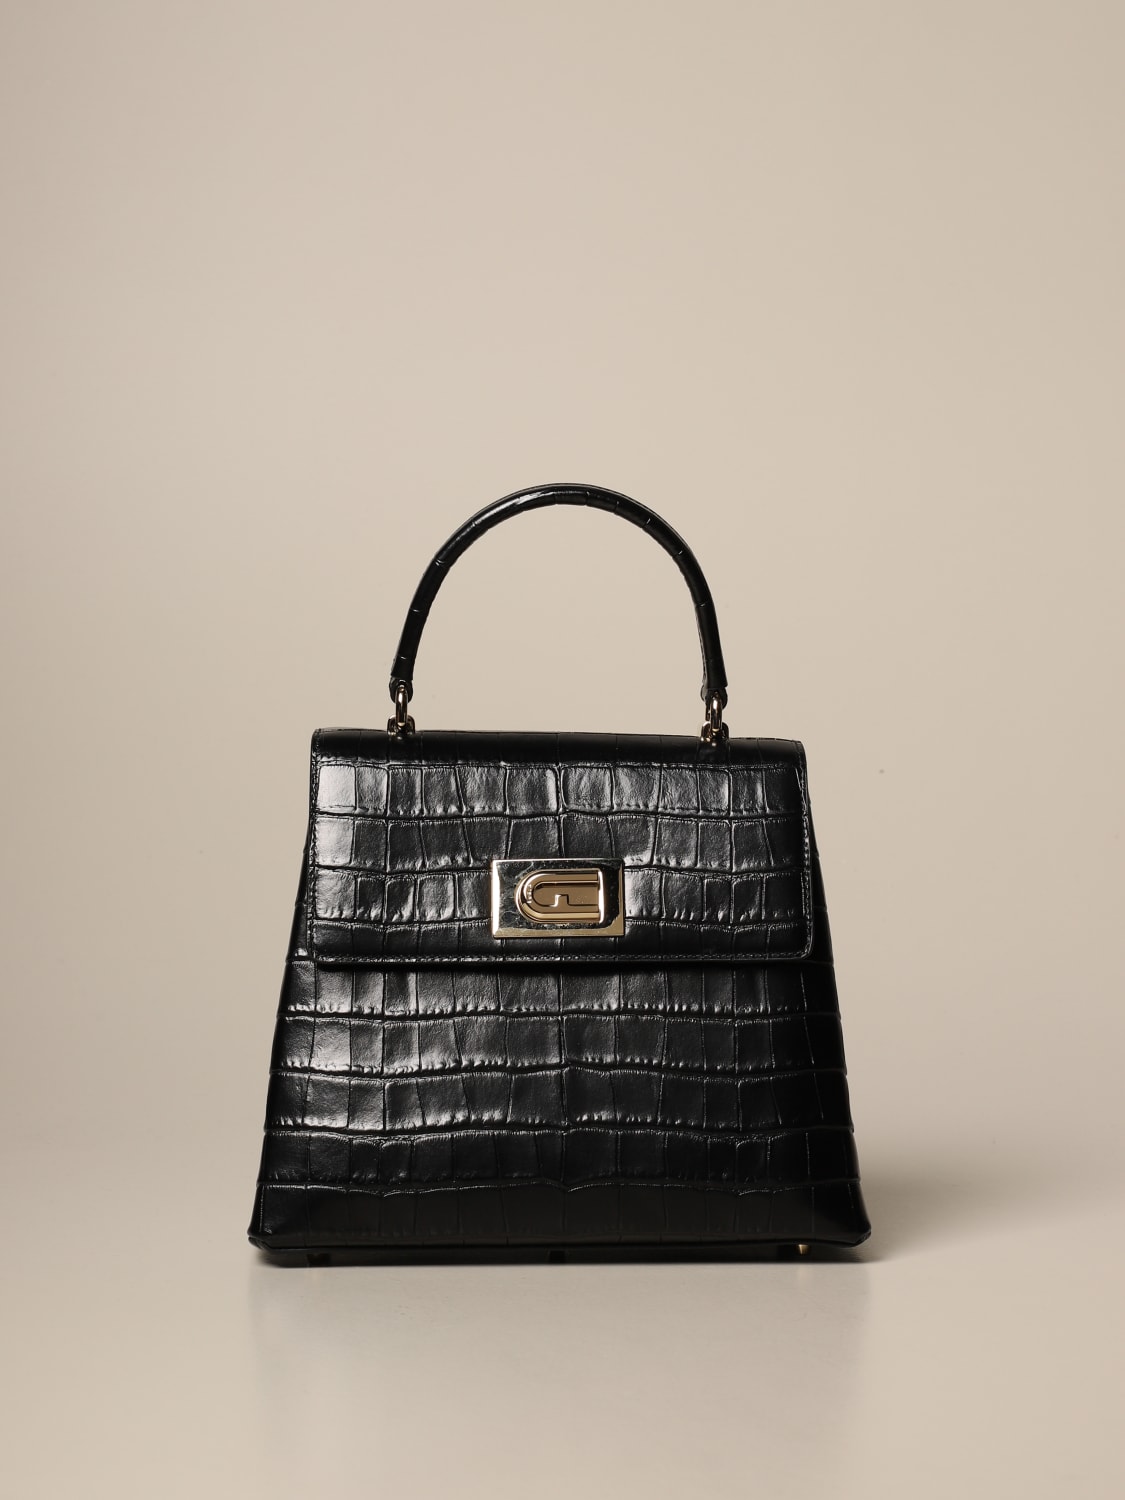 Furla 1927 Bag In Crocodile Print Leather Black Furla Handbag